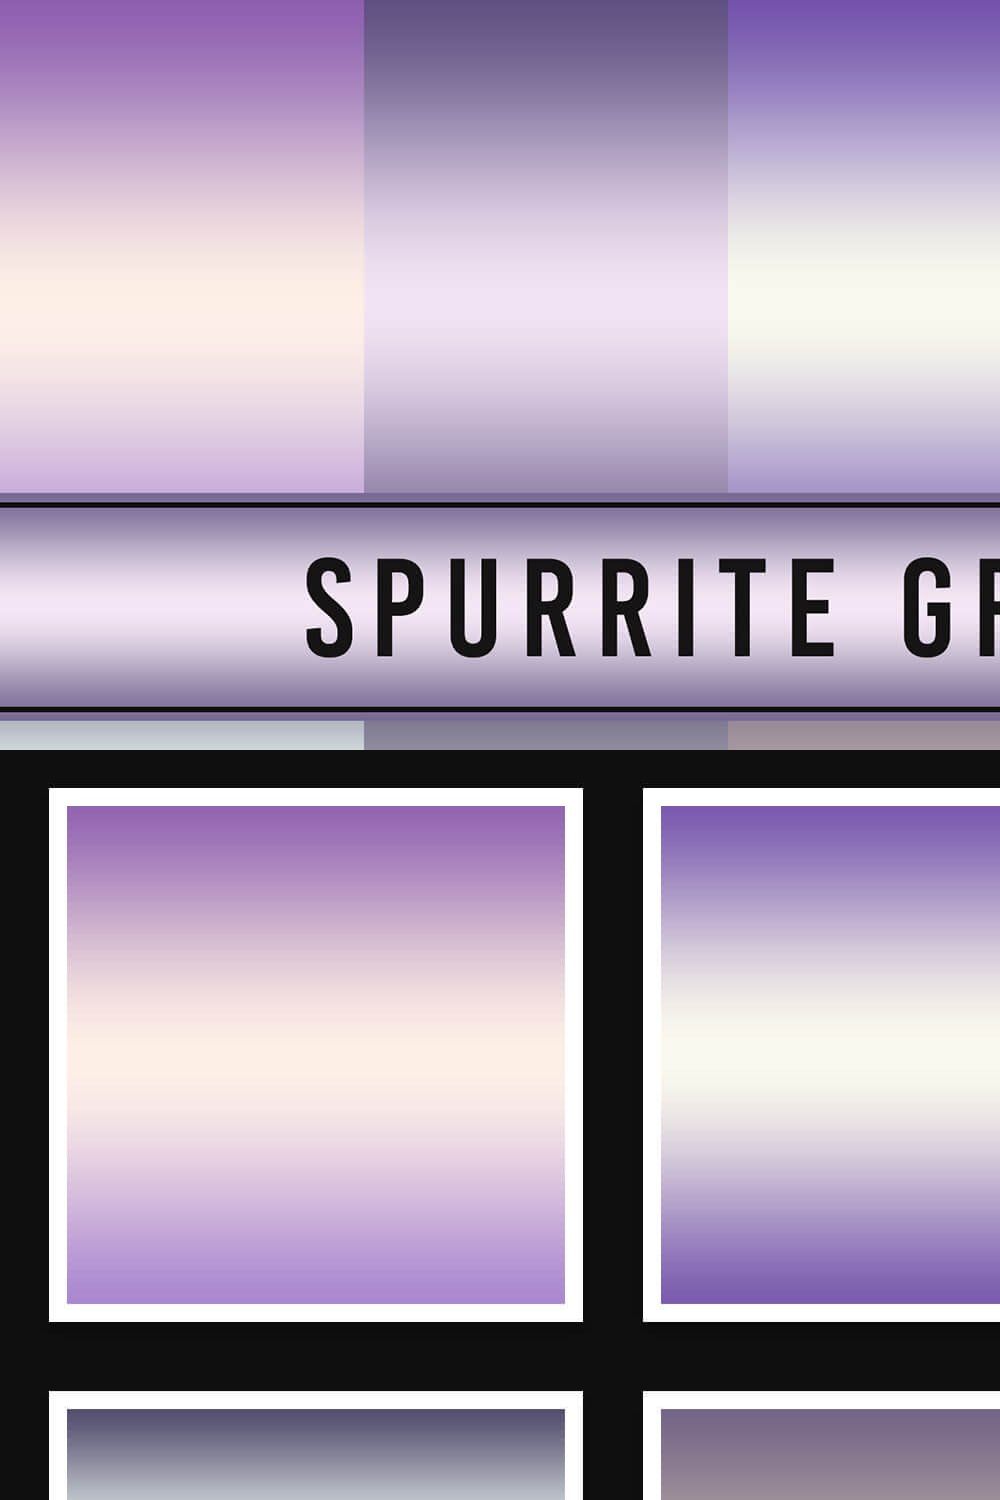 Spurrite Gradients pinterest preview image.